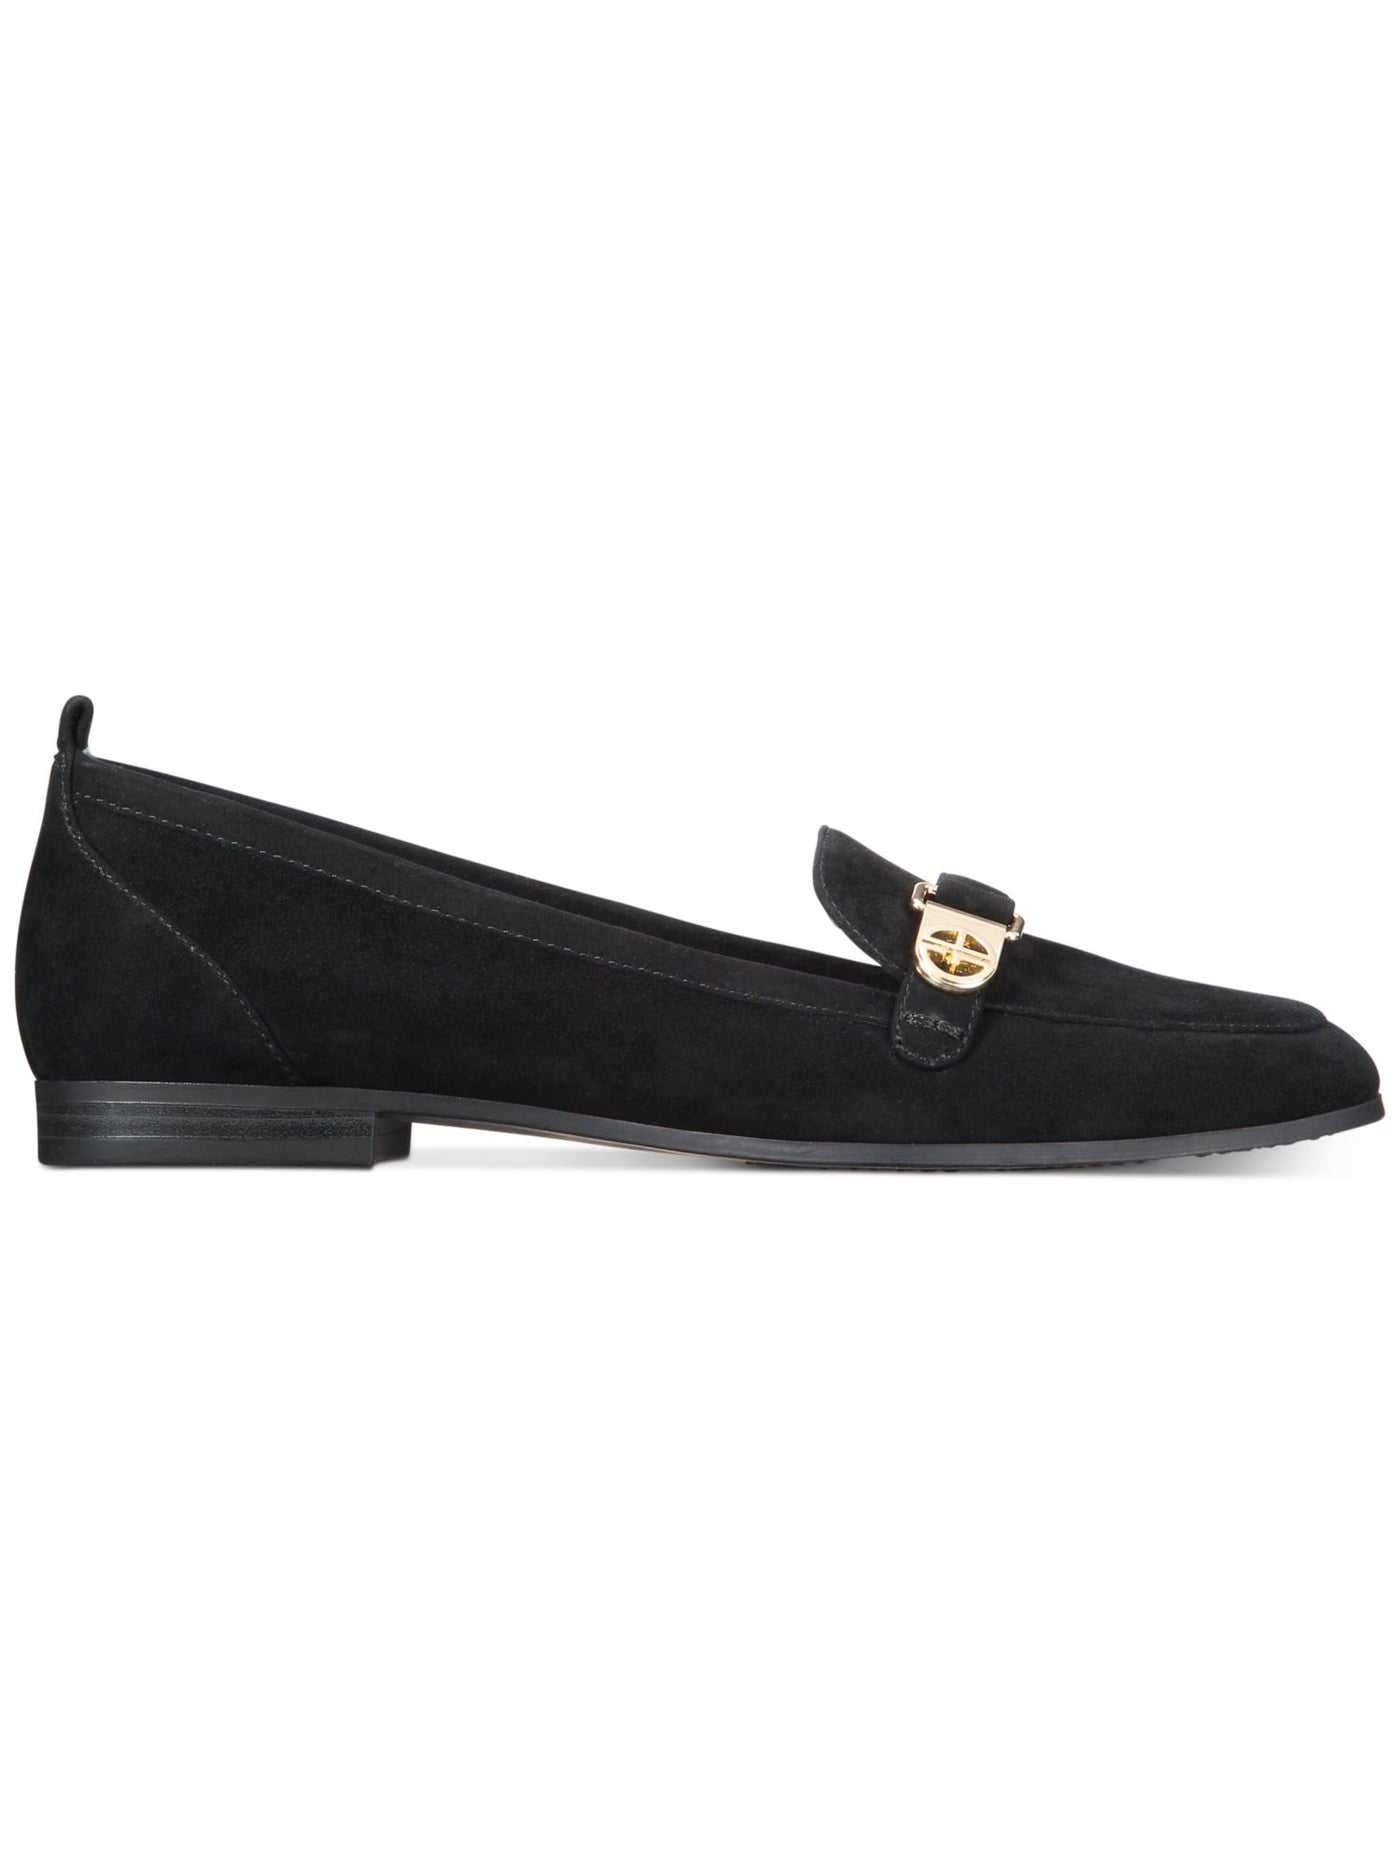 ALFANI Womens Black Logo Hardware Padded Comfort Axtonn Round Toe Block Heel Slip On Leather Loafers Shoes 7.5 M